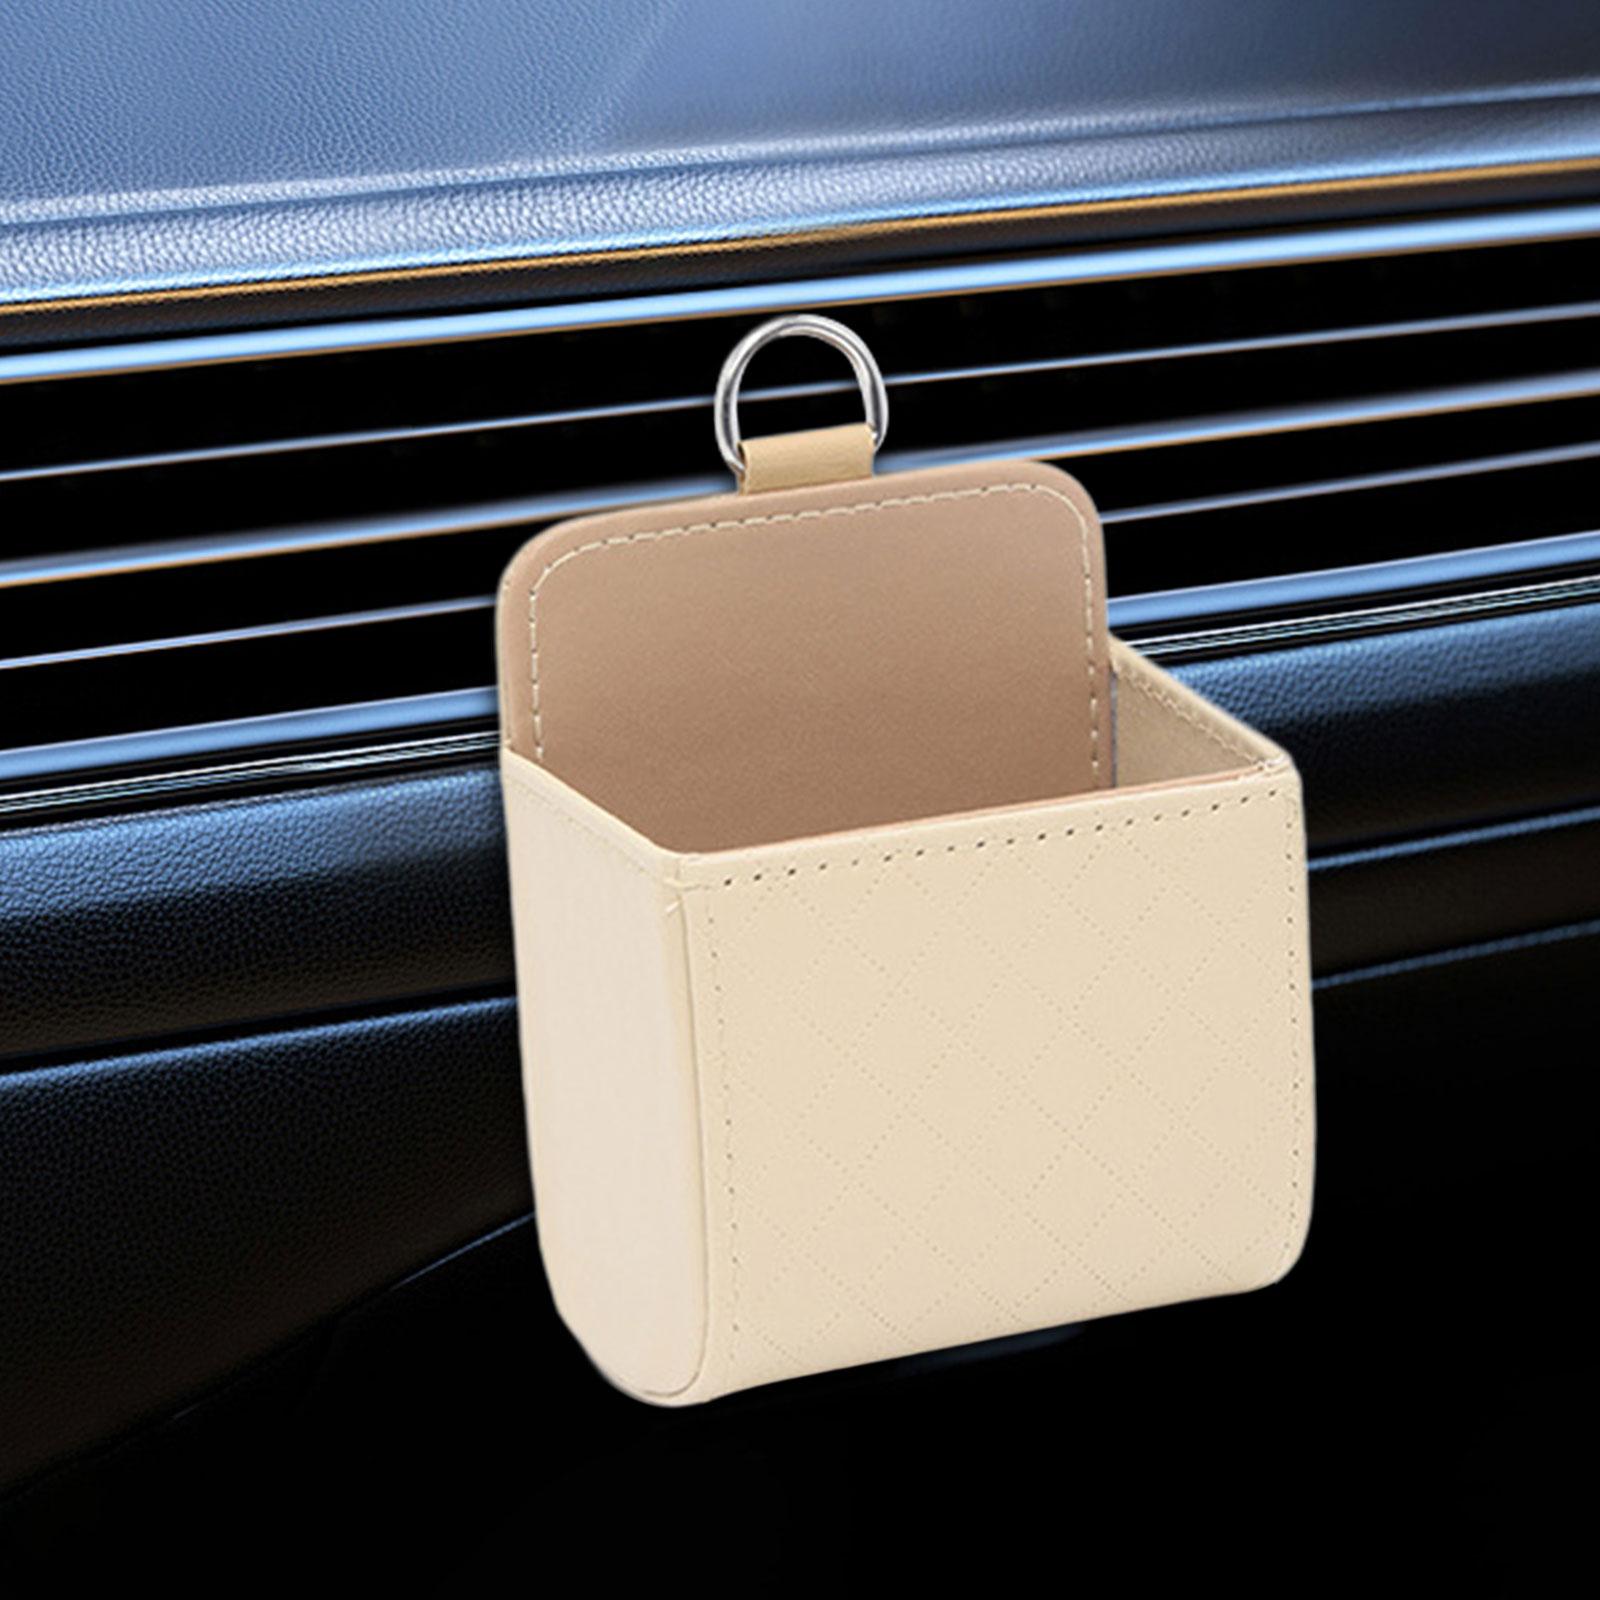 Car Air Vent Bag Organizer Durable Air Vent Holder Bag for Phones Bills Beige